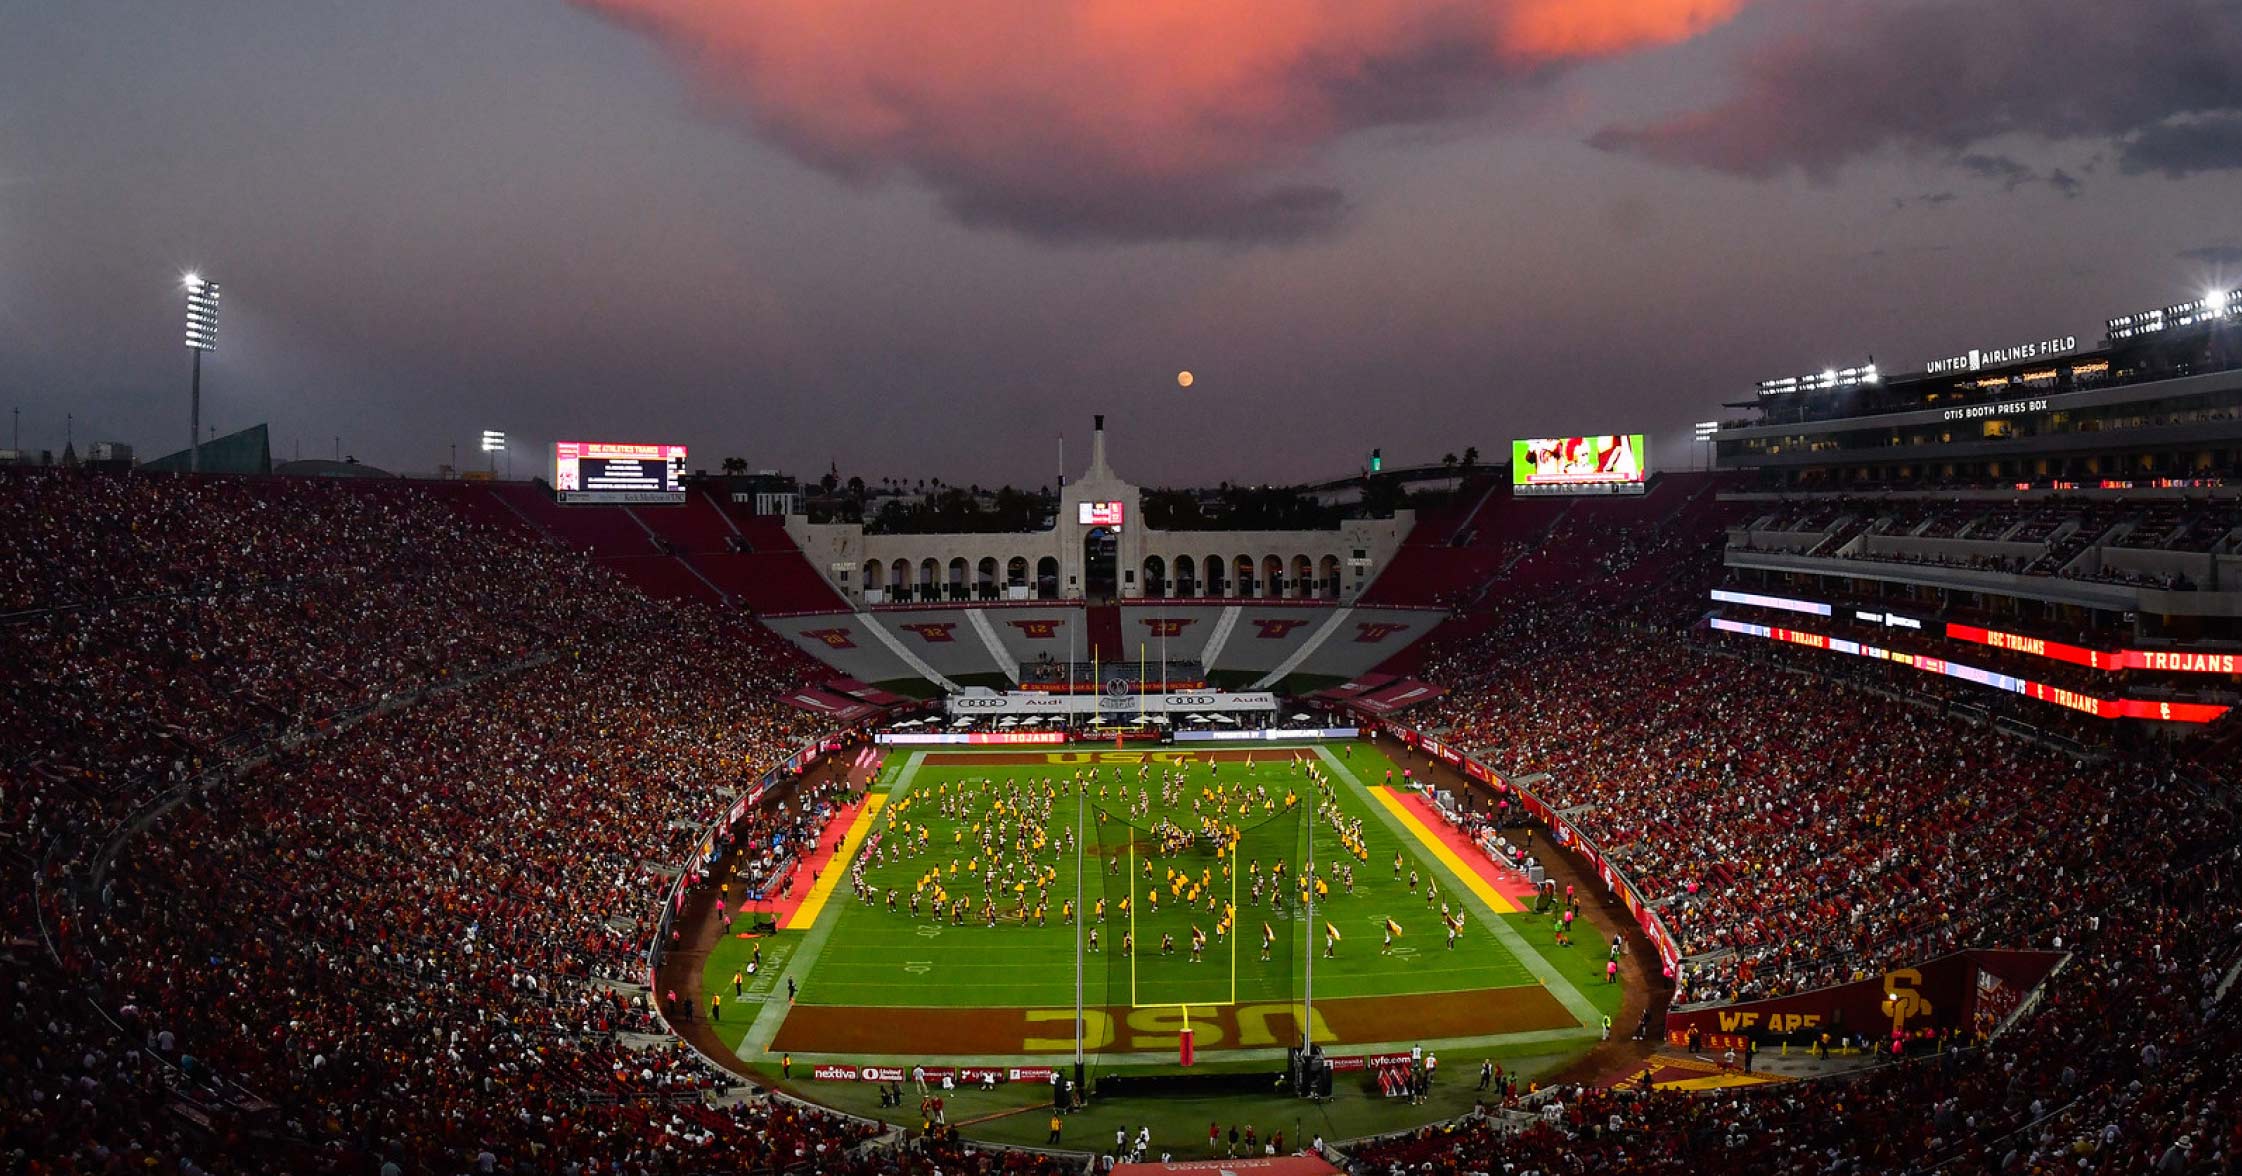 USC Trojans halftime show in L.A. Coliseum at sunset